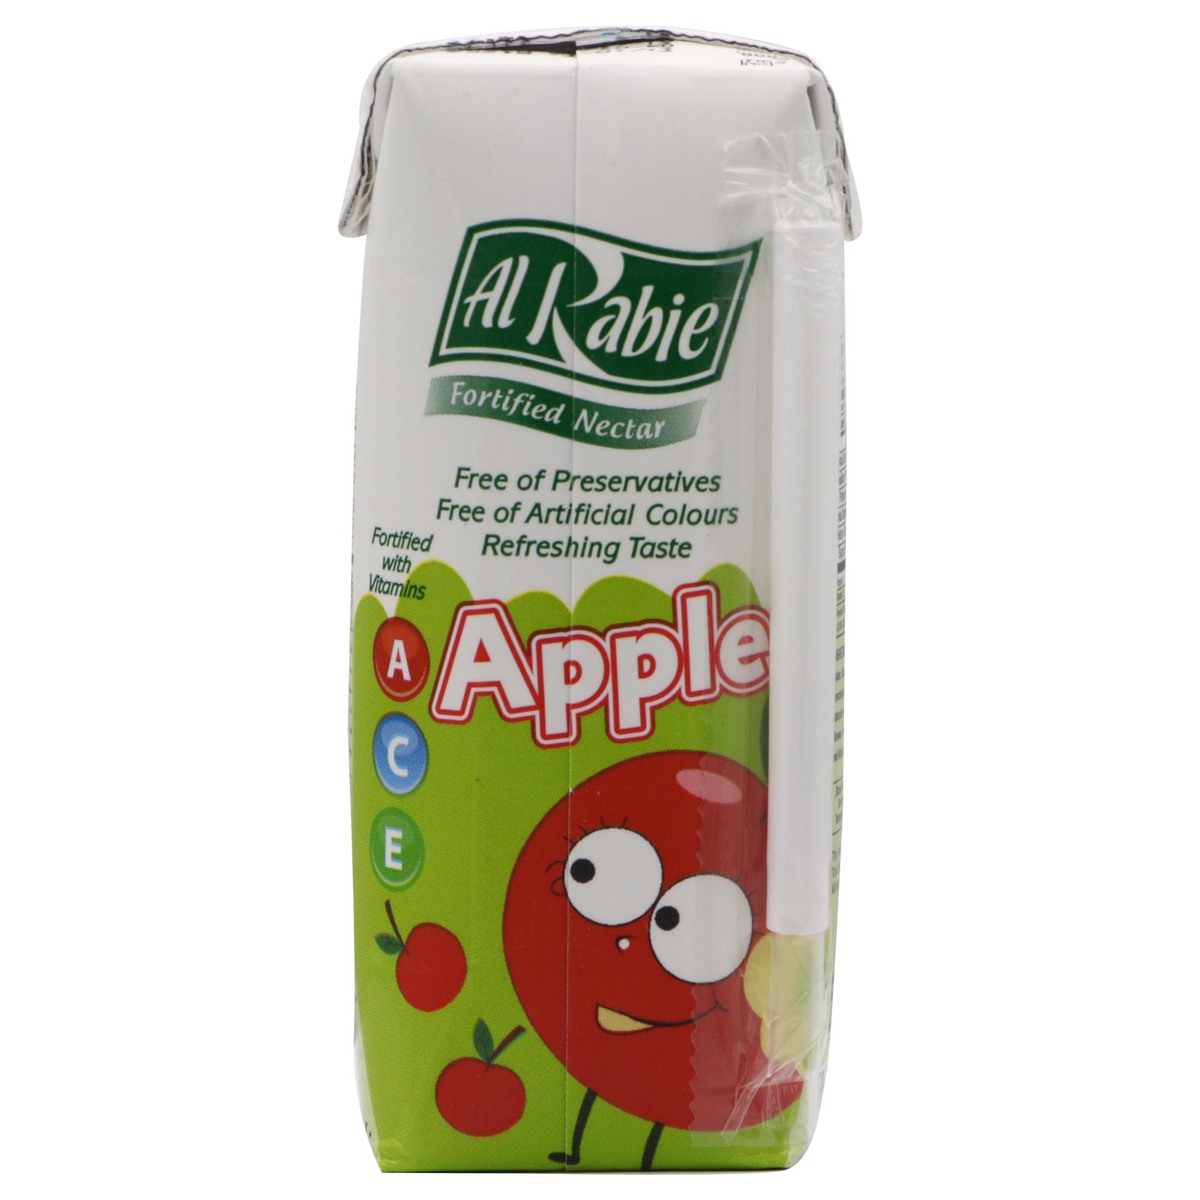 Al Rabie Apple Fortified Nectar 24 x 120ml